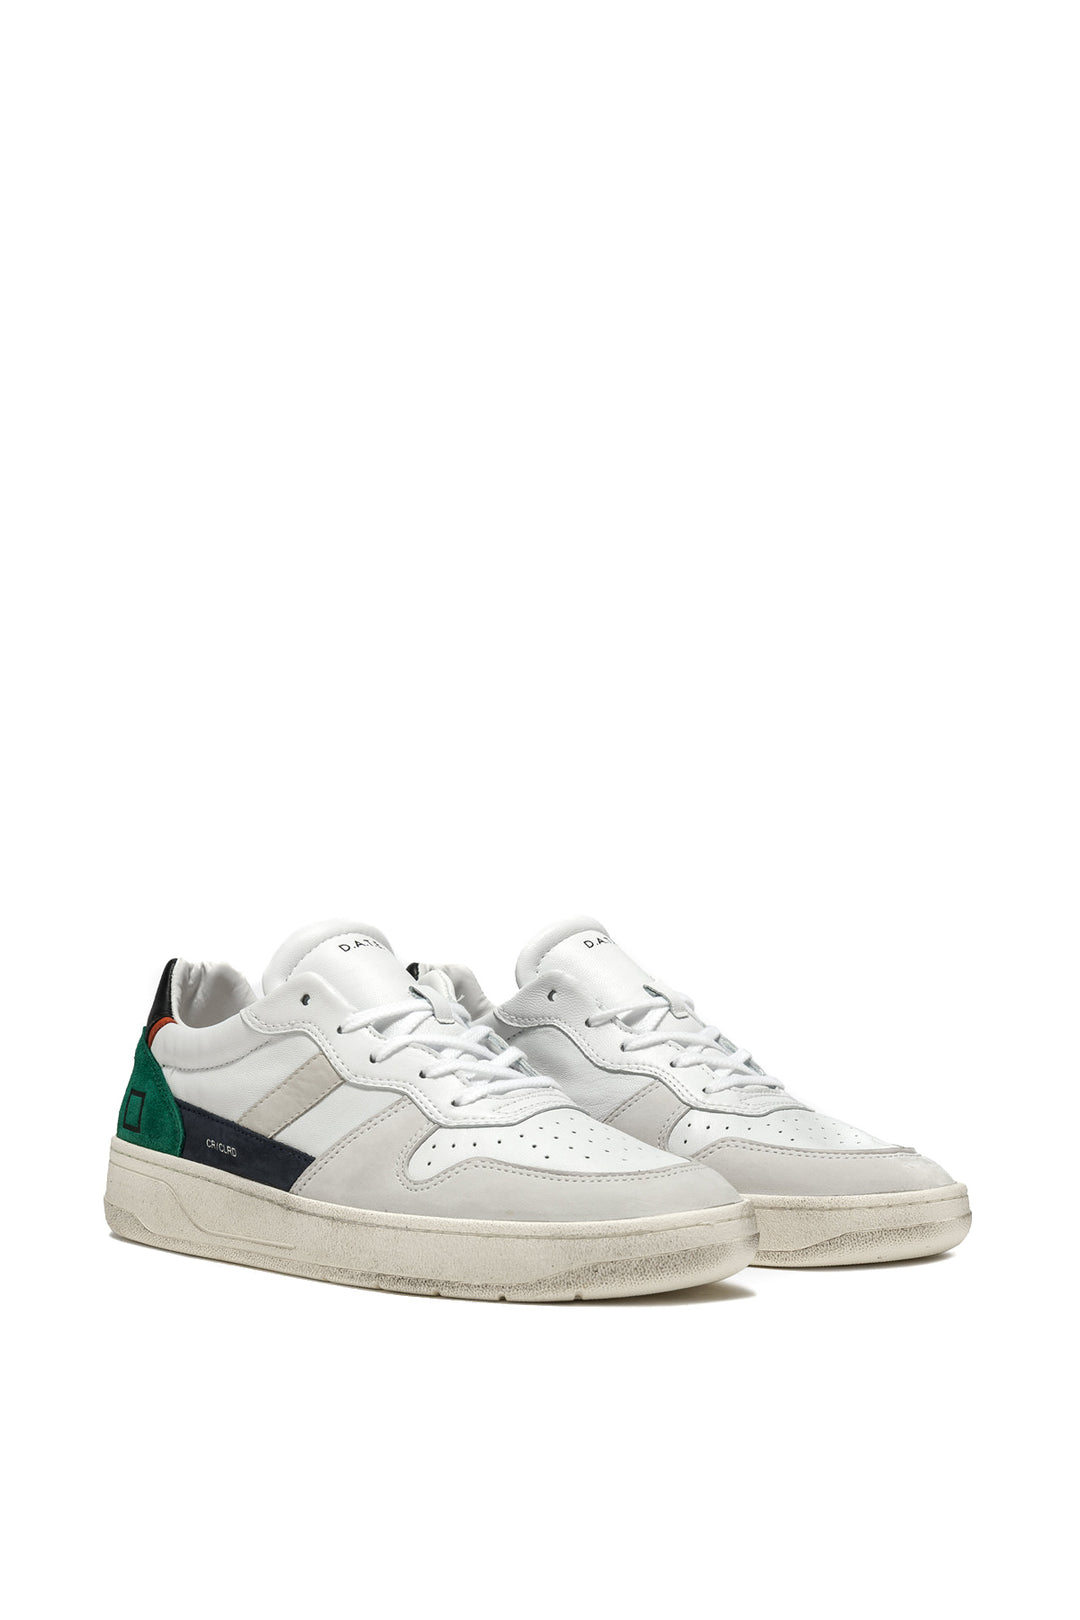 DATE Sneaker COURT 2.0 colored white-green - Mancinelli 1954